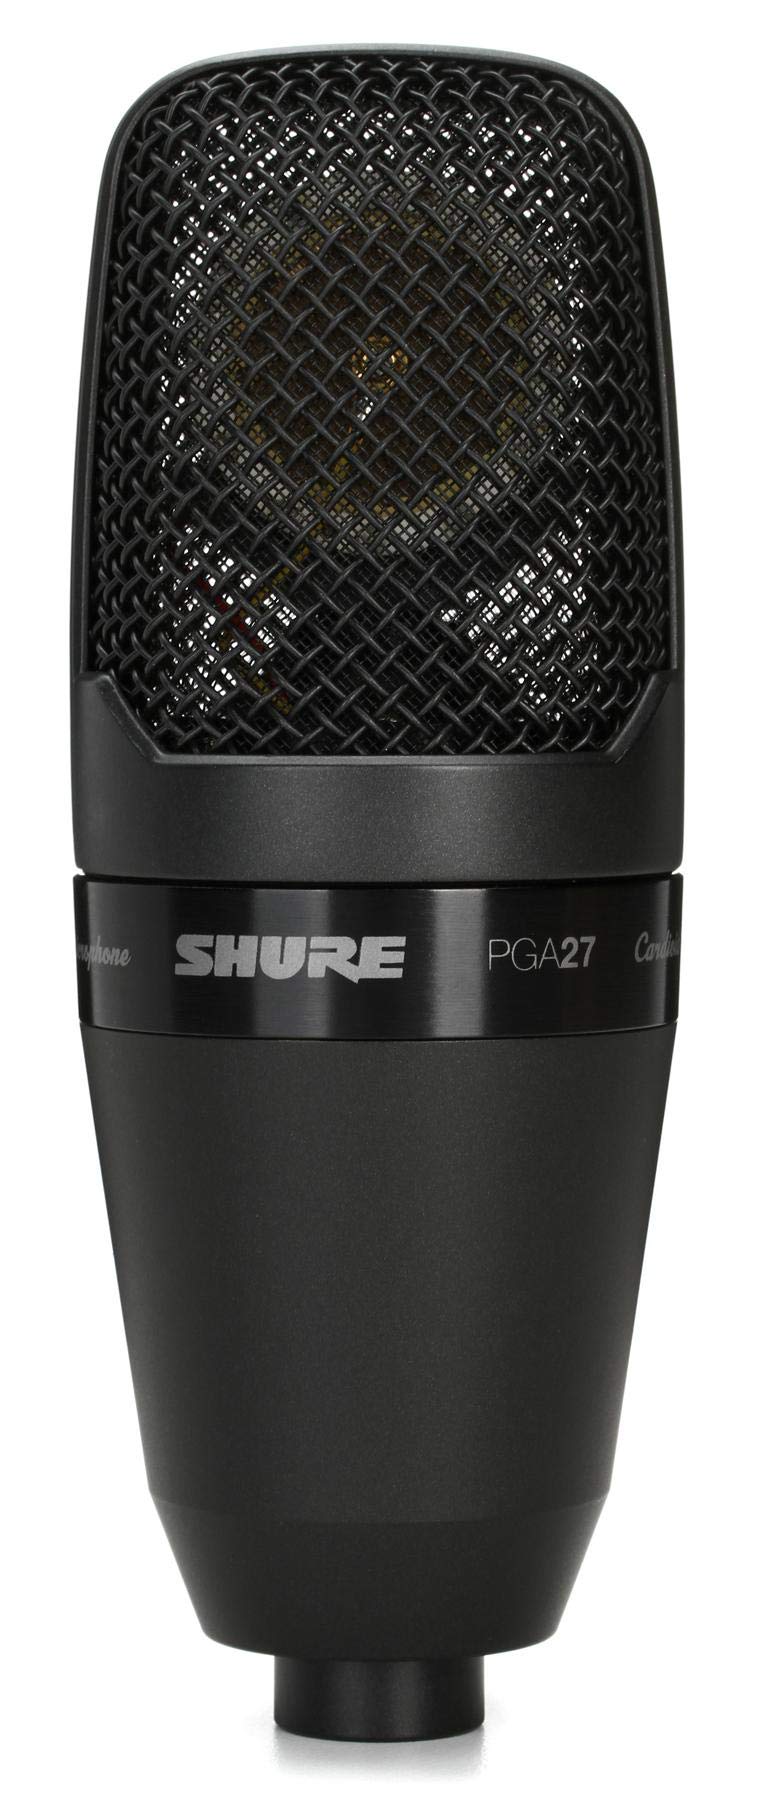 Shure PGA27 Großmembran-Kondensatormikrofon mit Nierencharakteristik, inkl. Mikrofonspinne und Transport-Case (ohne Kabel)